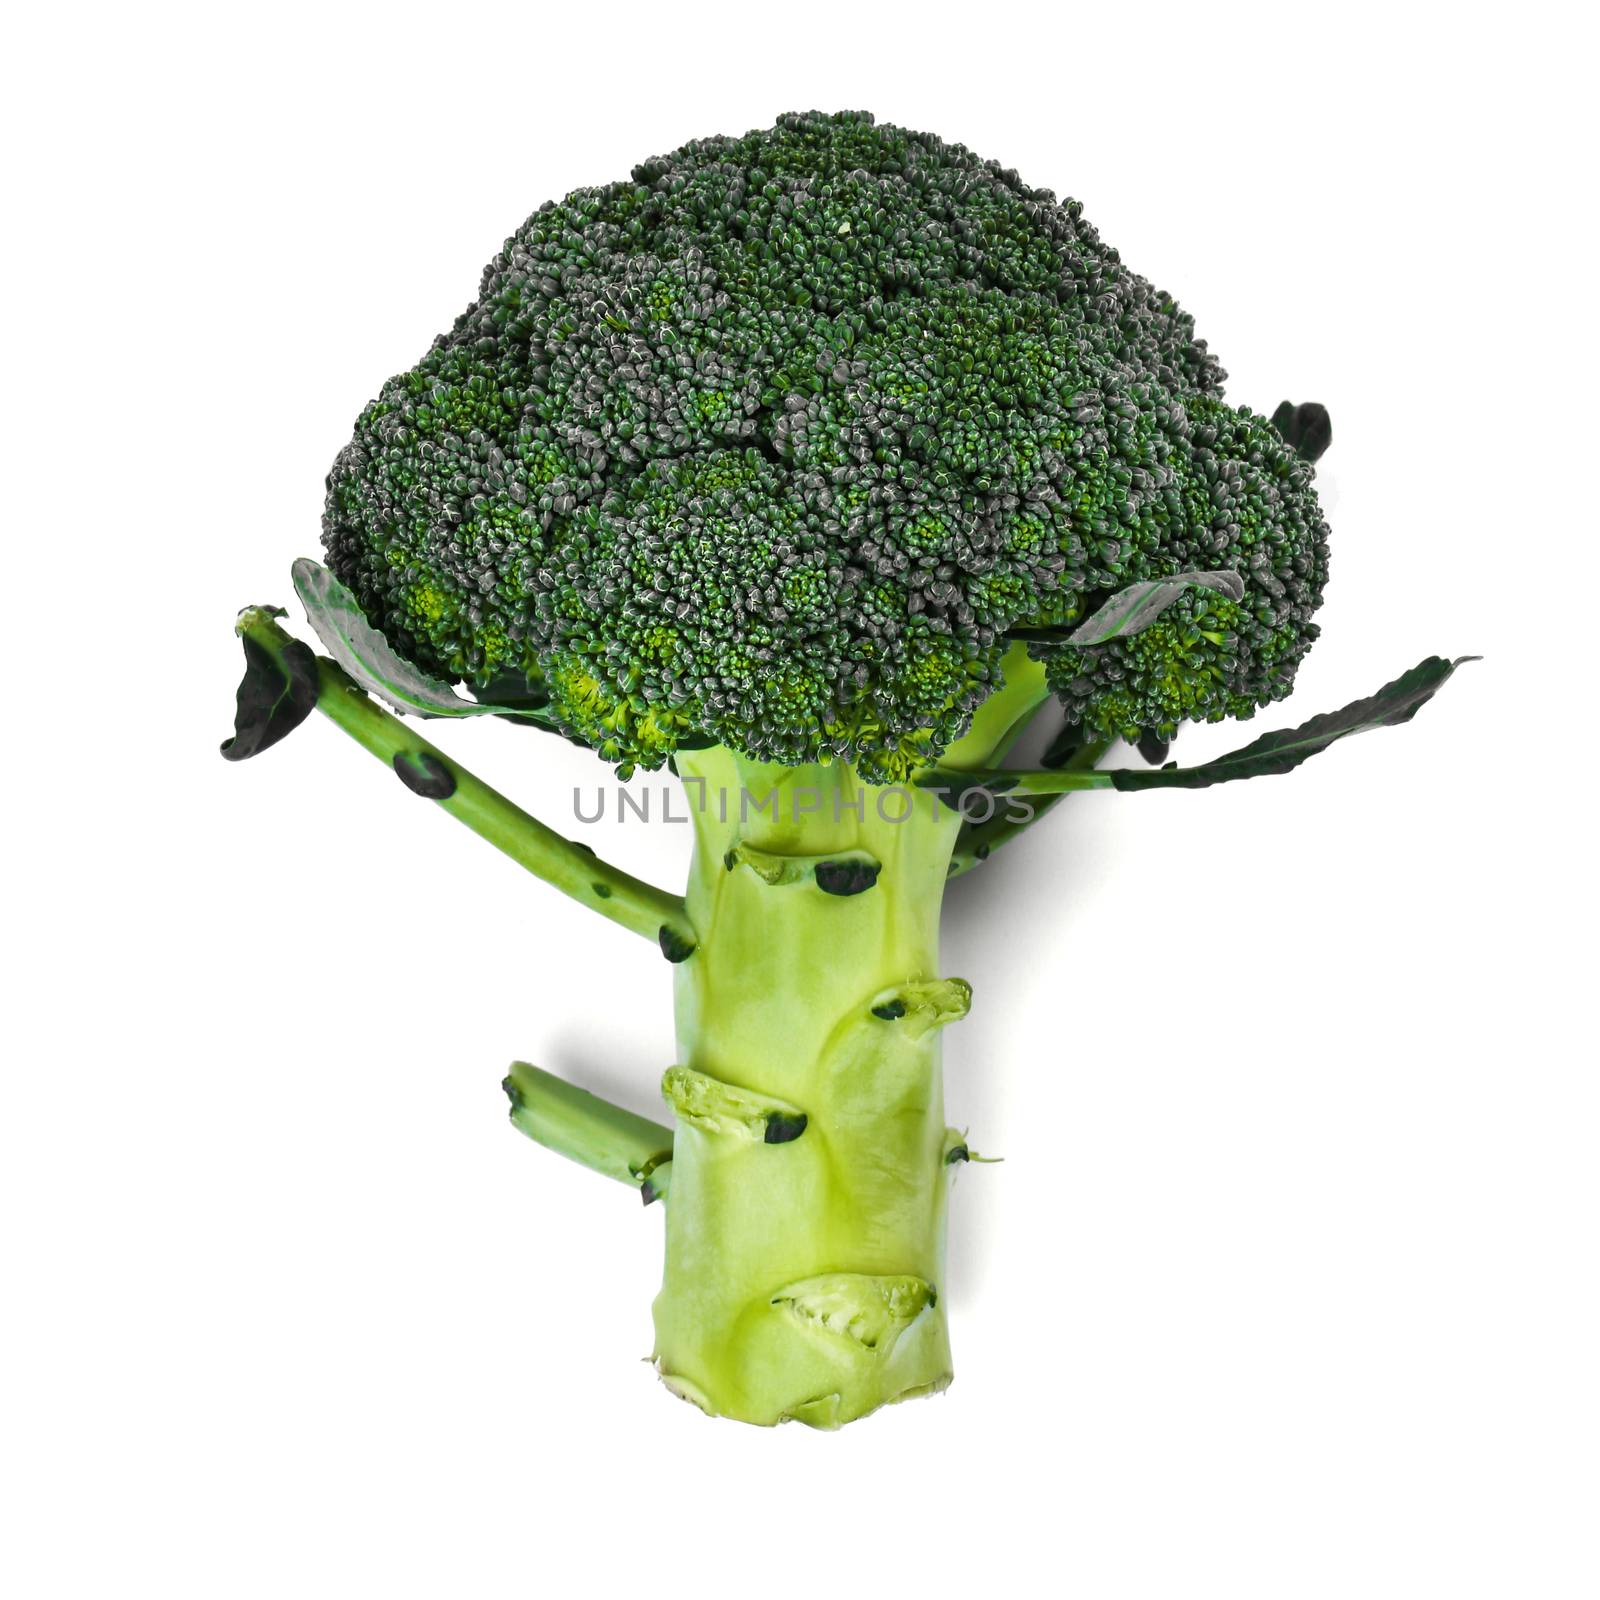 Delicious broccoli on a white background